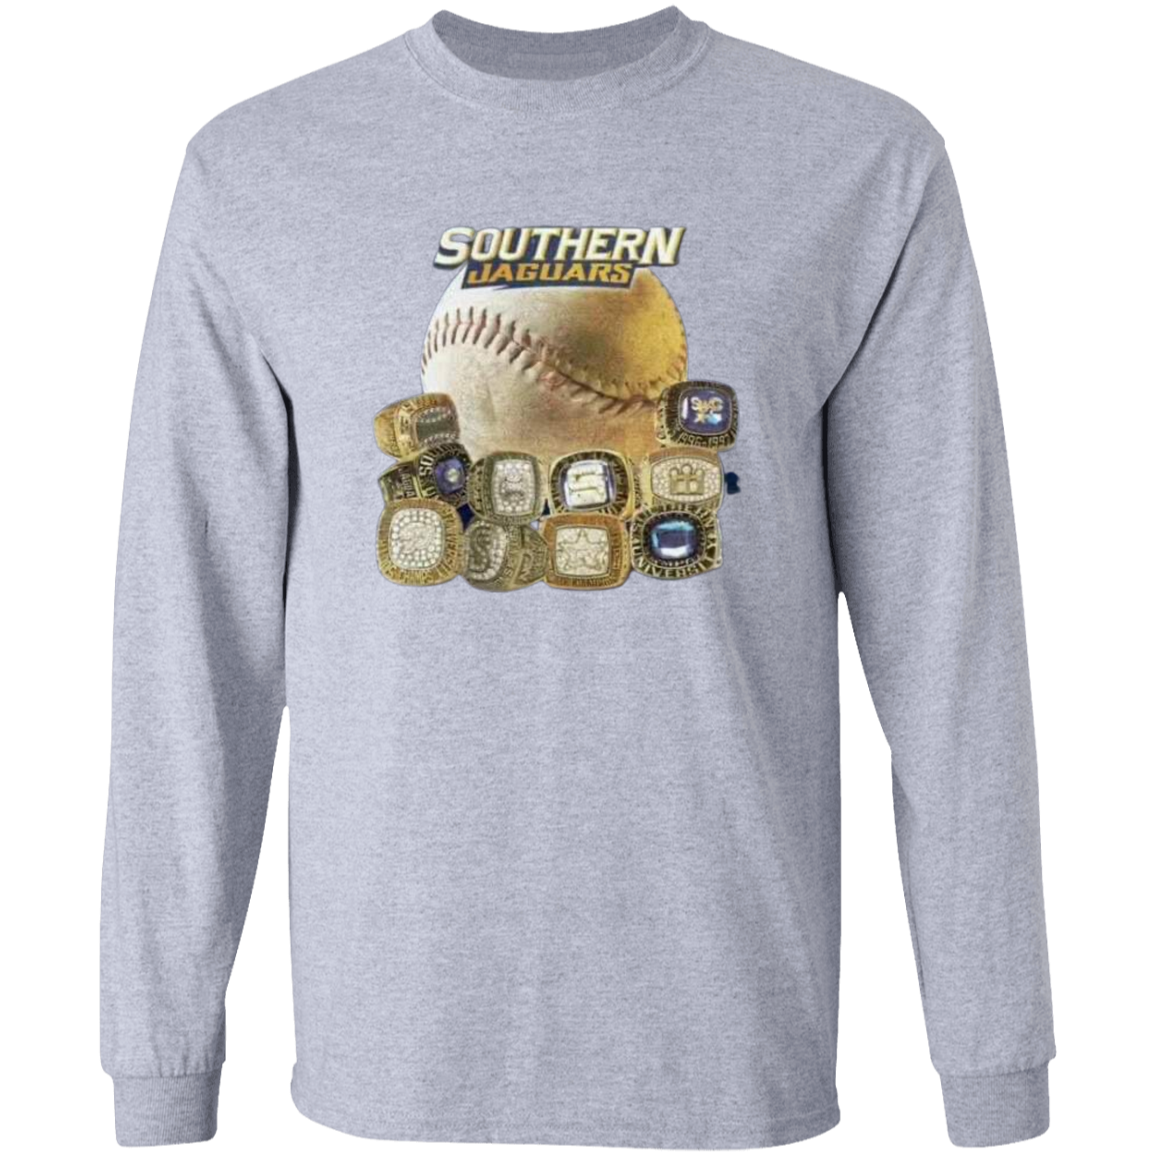 SU Baseball SWAC (Southern Wins Another Championship)  Rings G240 LS Ultra Cotton T-Shirt